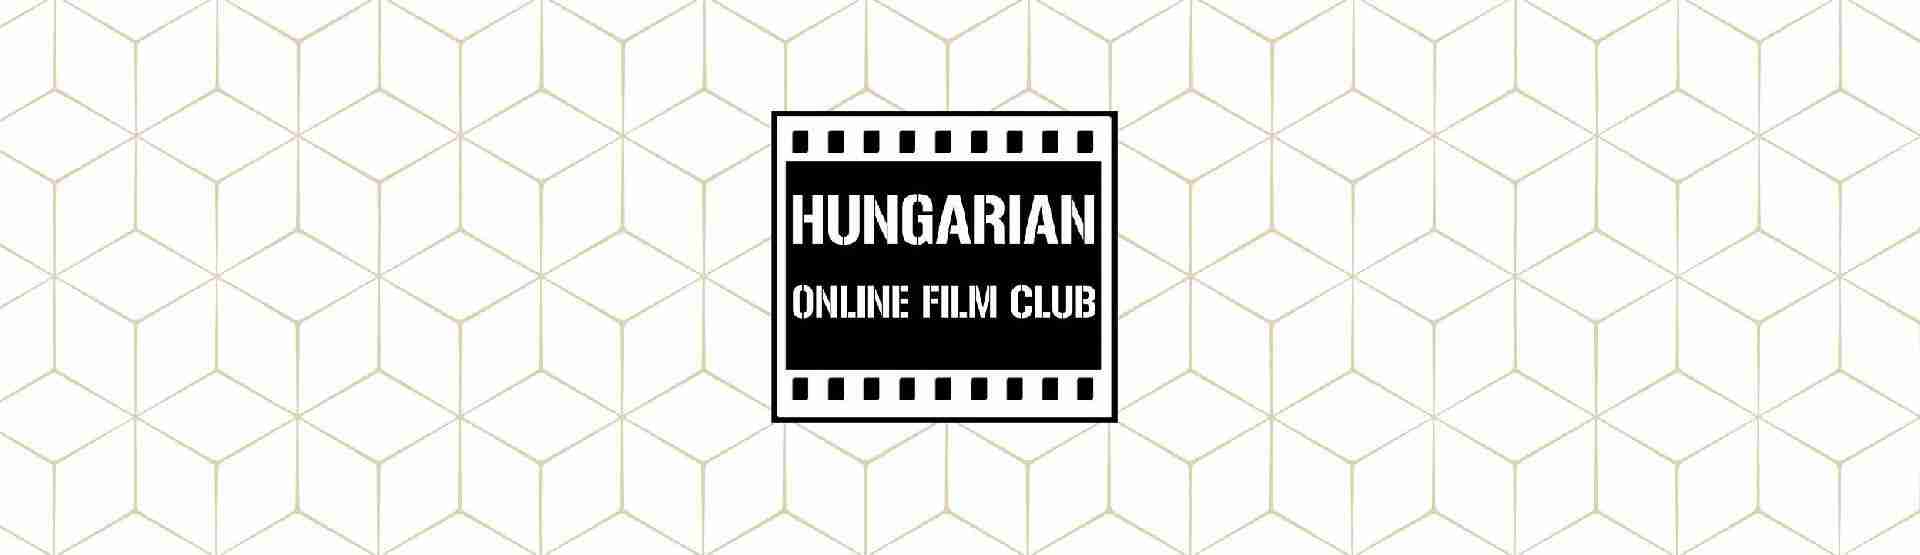 Hungarian Online Film Club - UPDATE